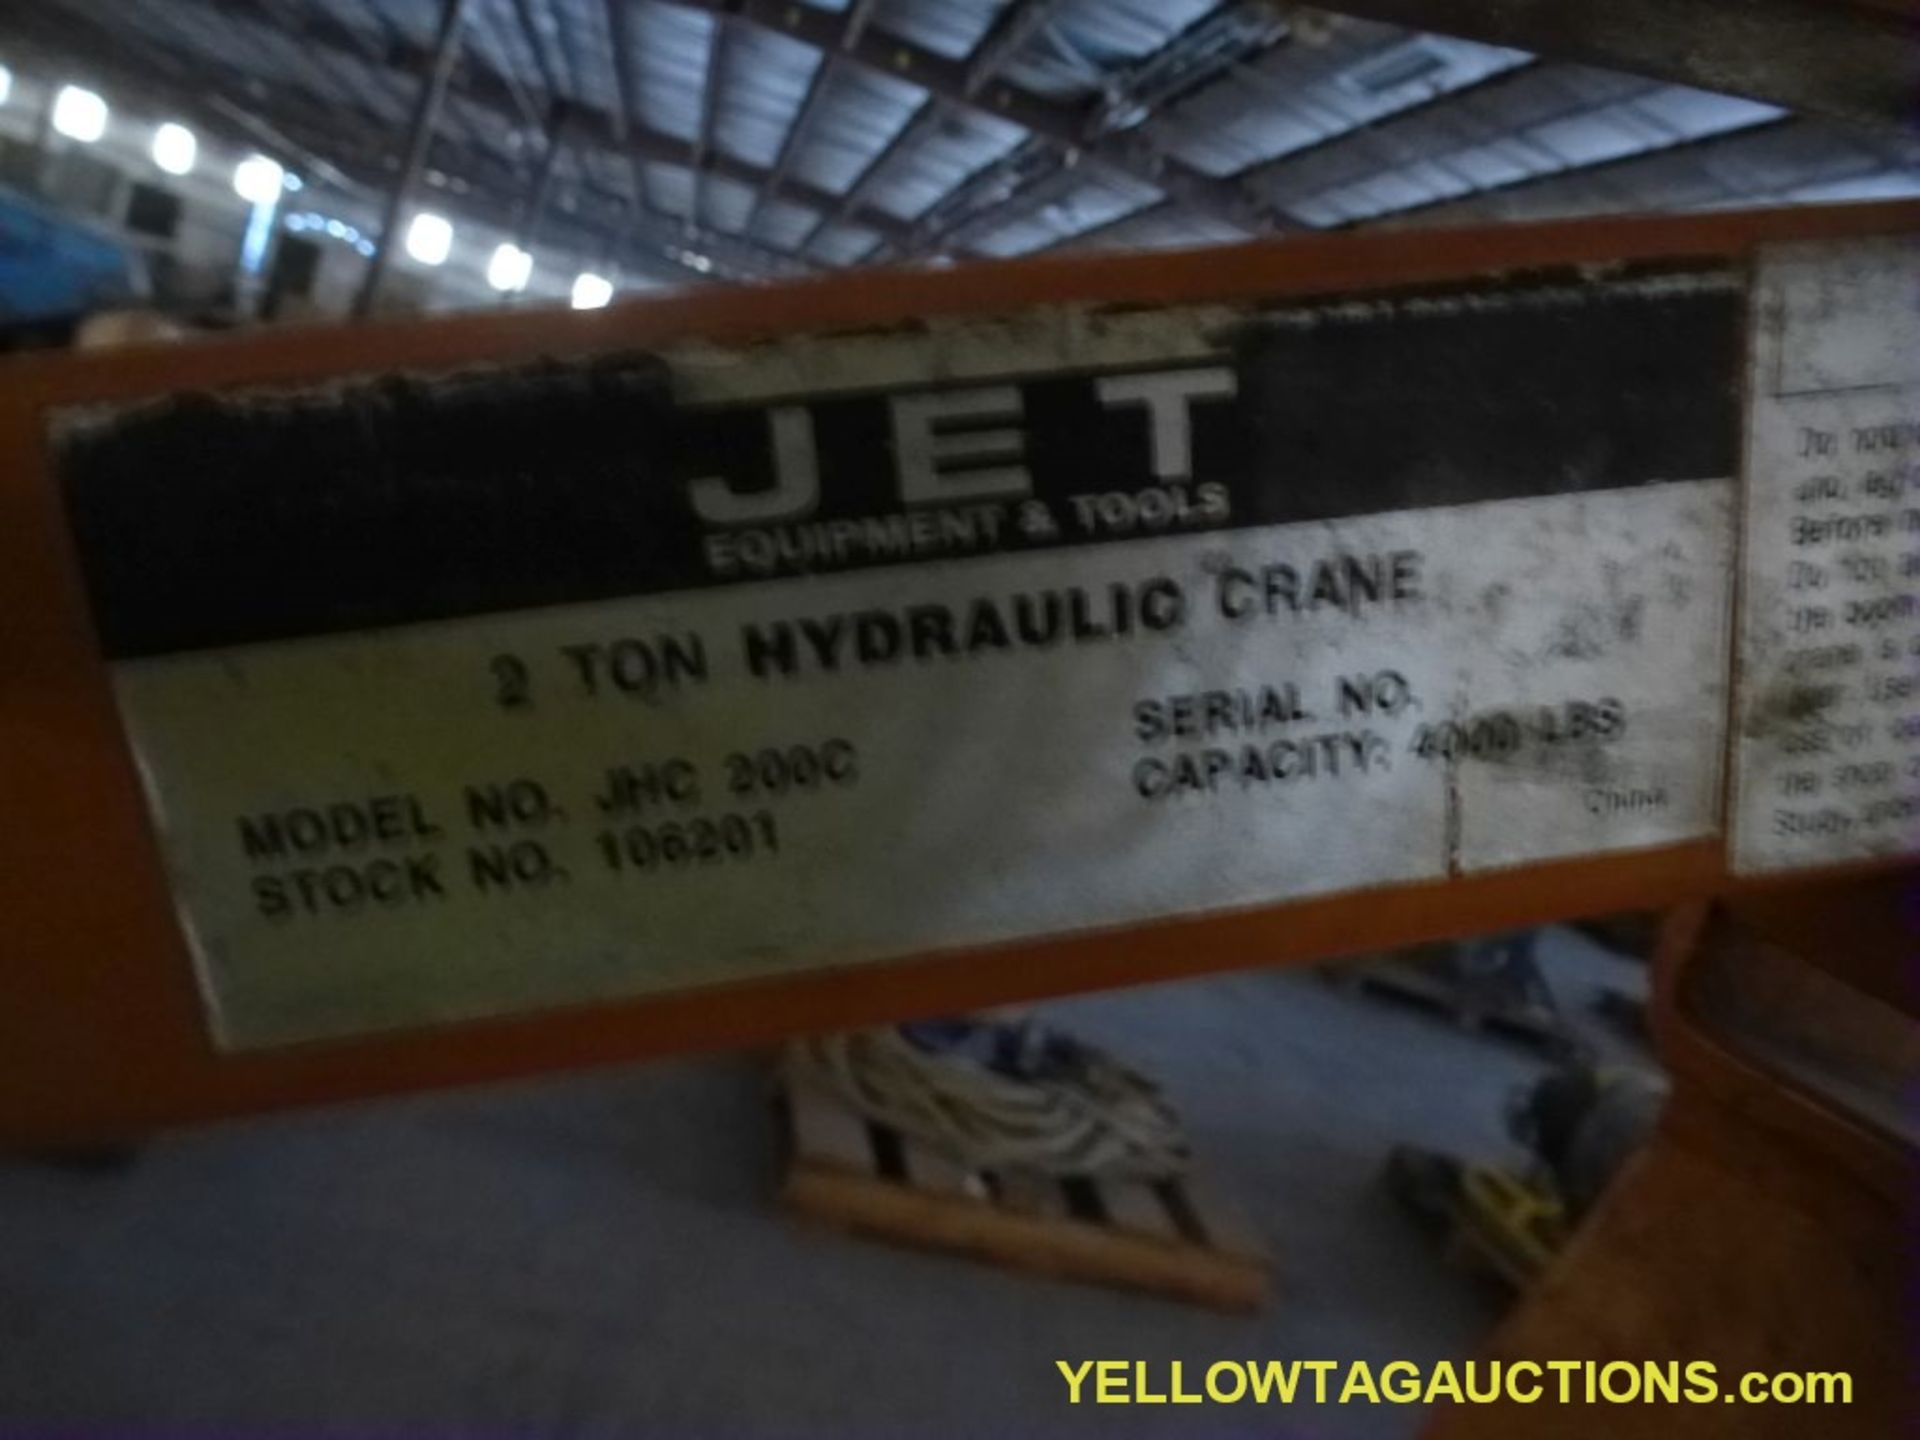 Jet 2 Ton Hydraulic Crane - Model No. JHC 200C - Image 2 of 4